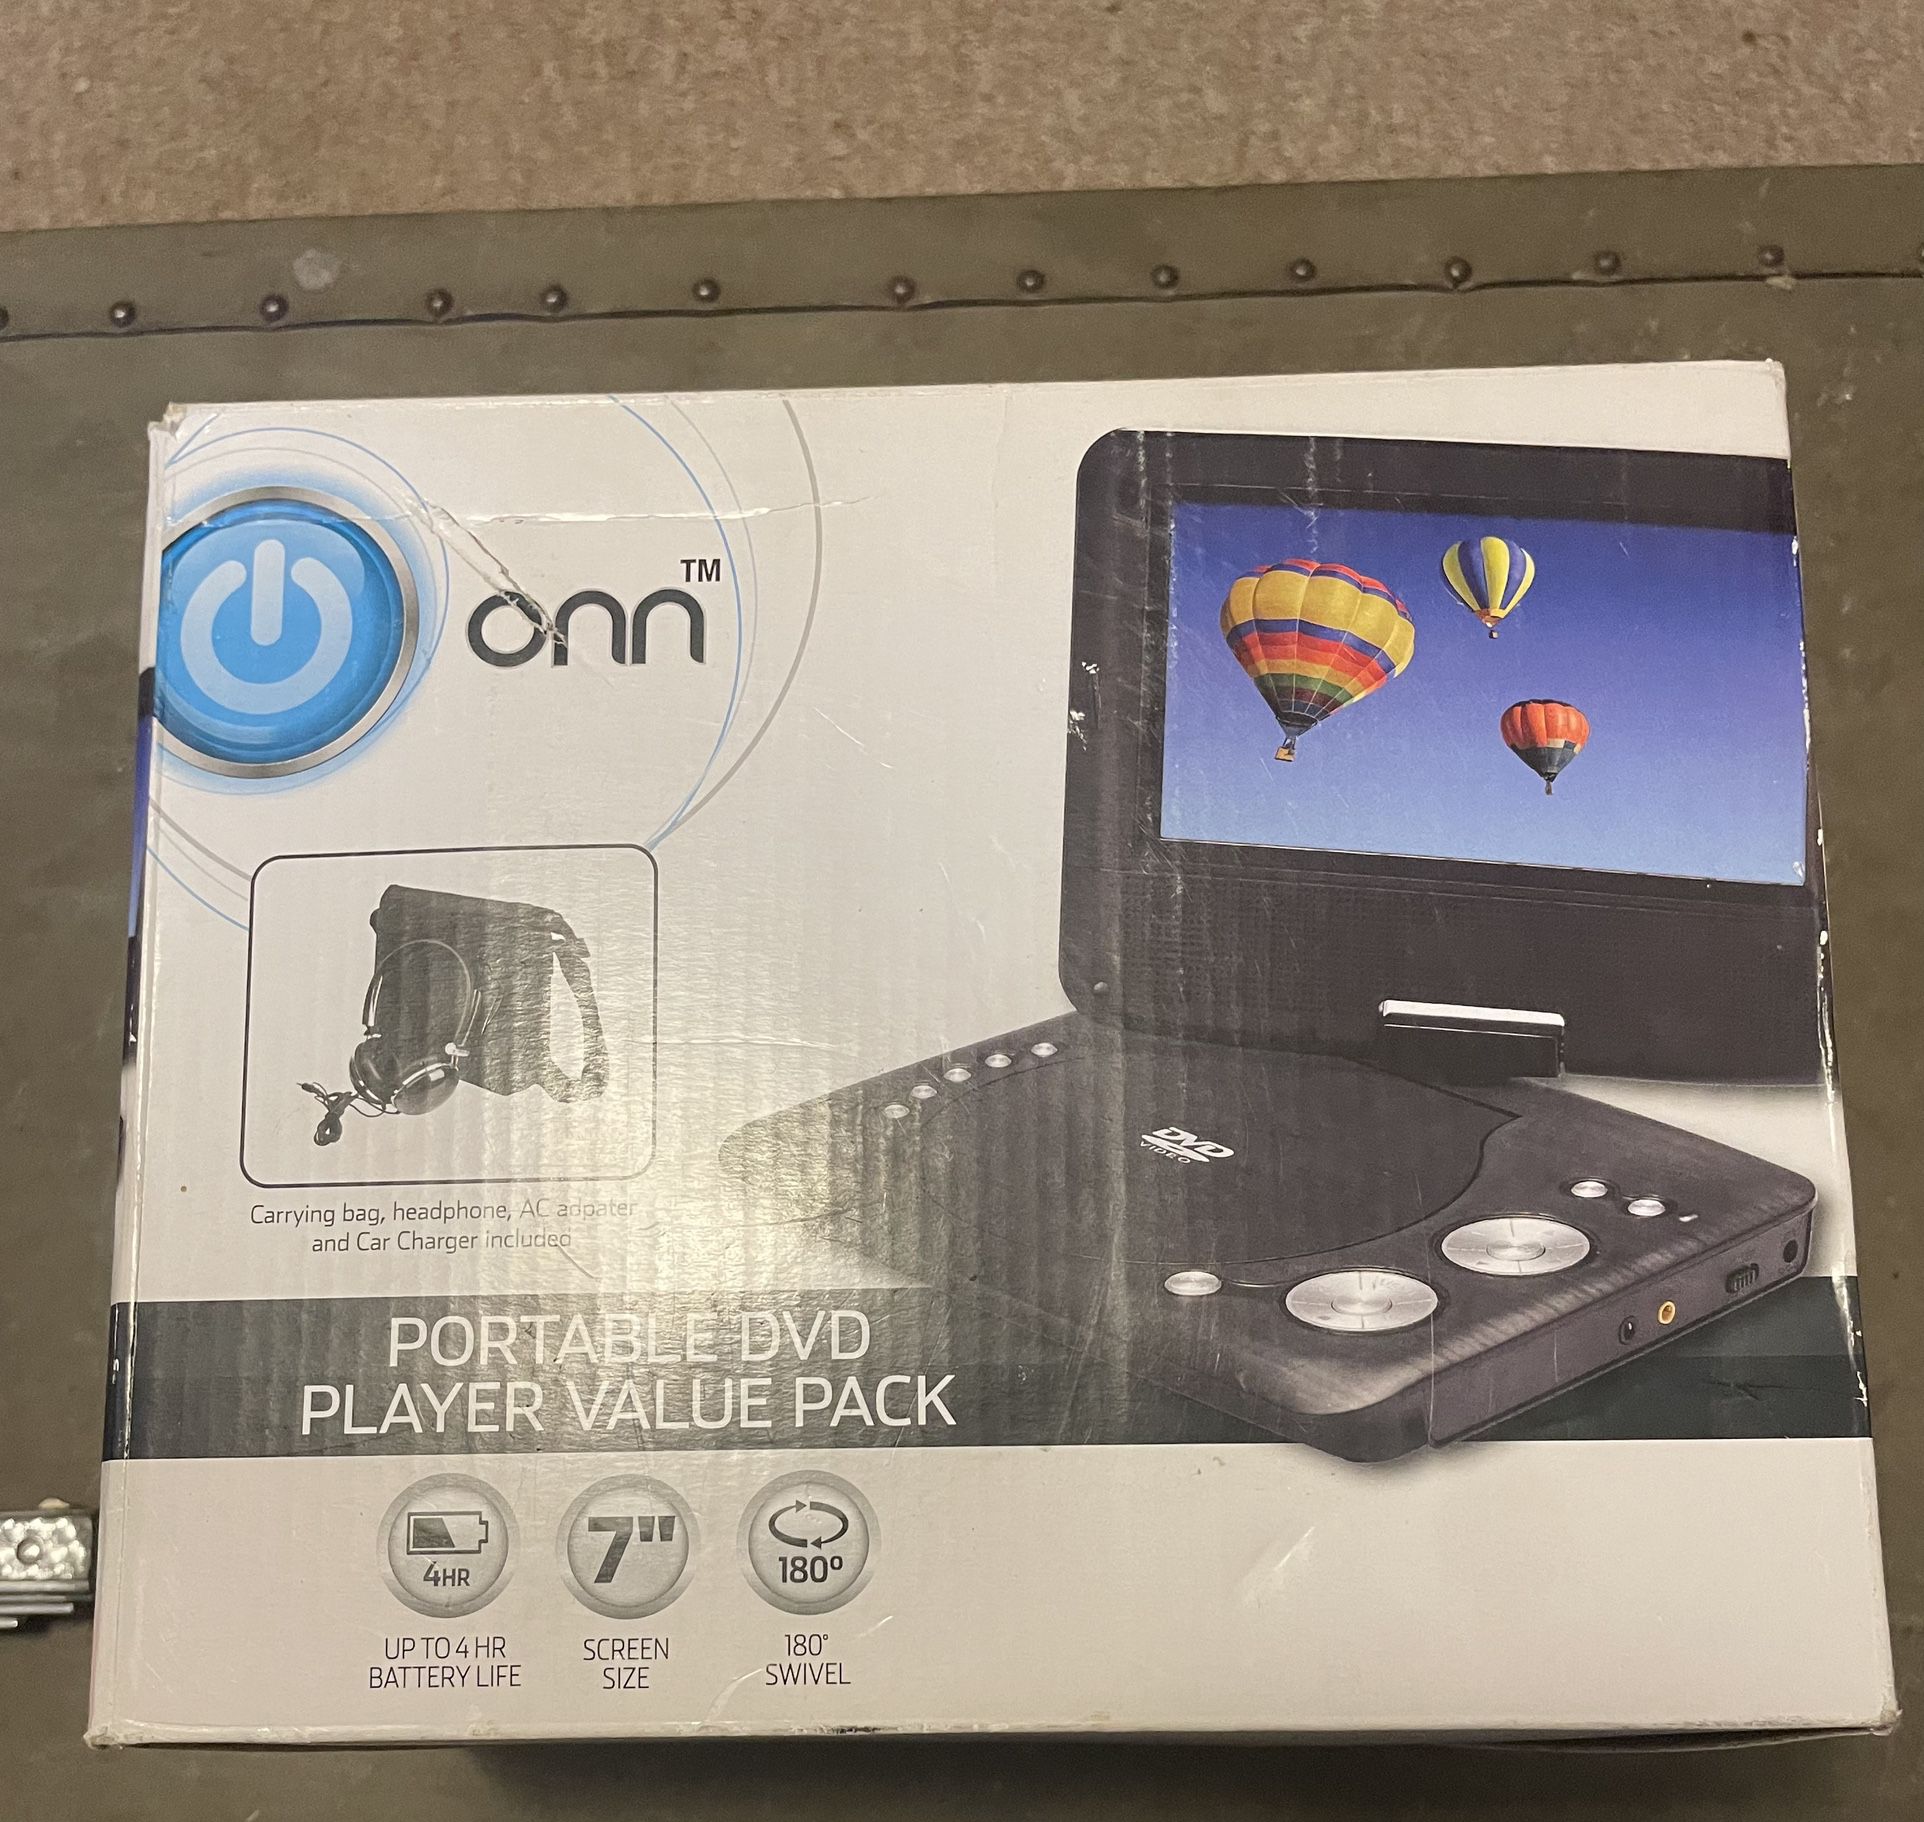 ONN Portable DVD Player Value Pack